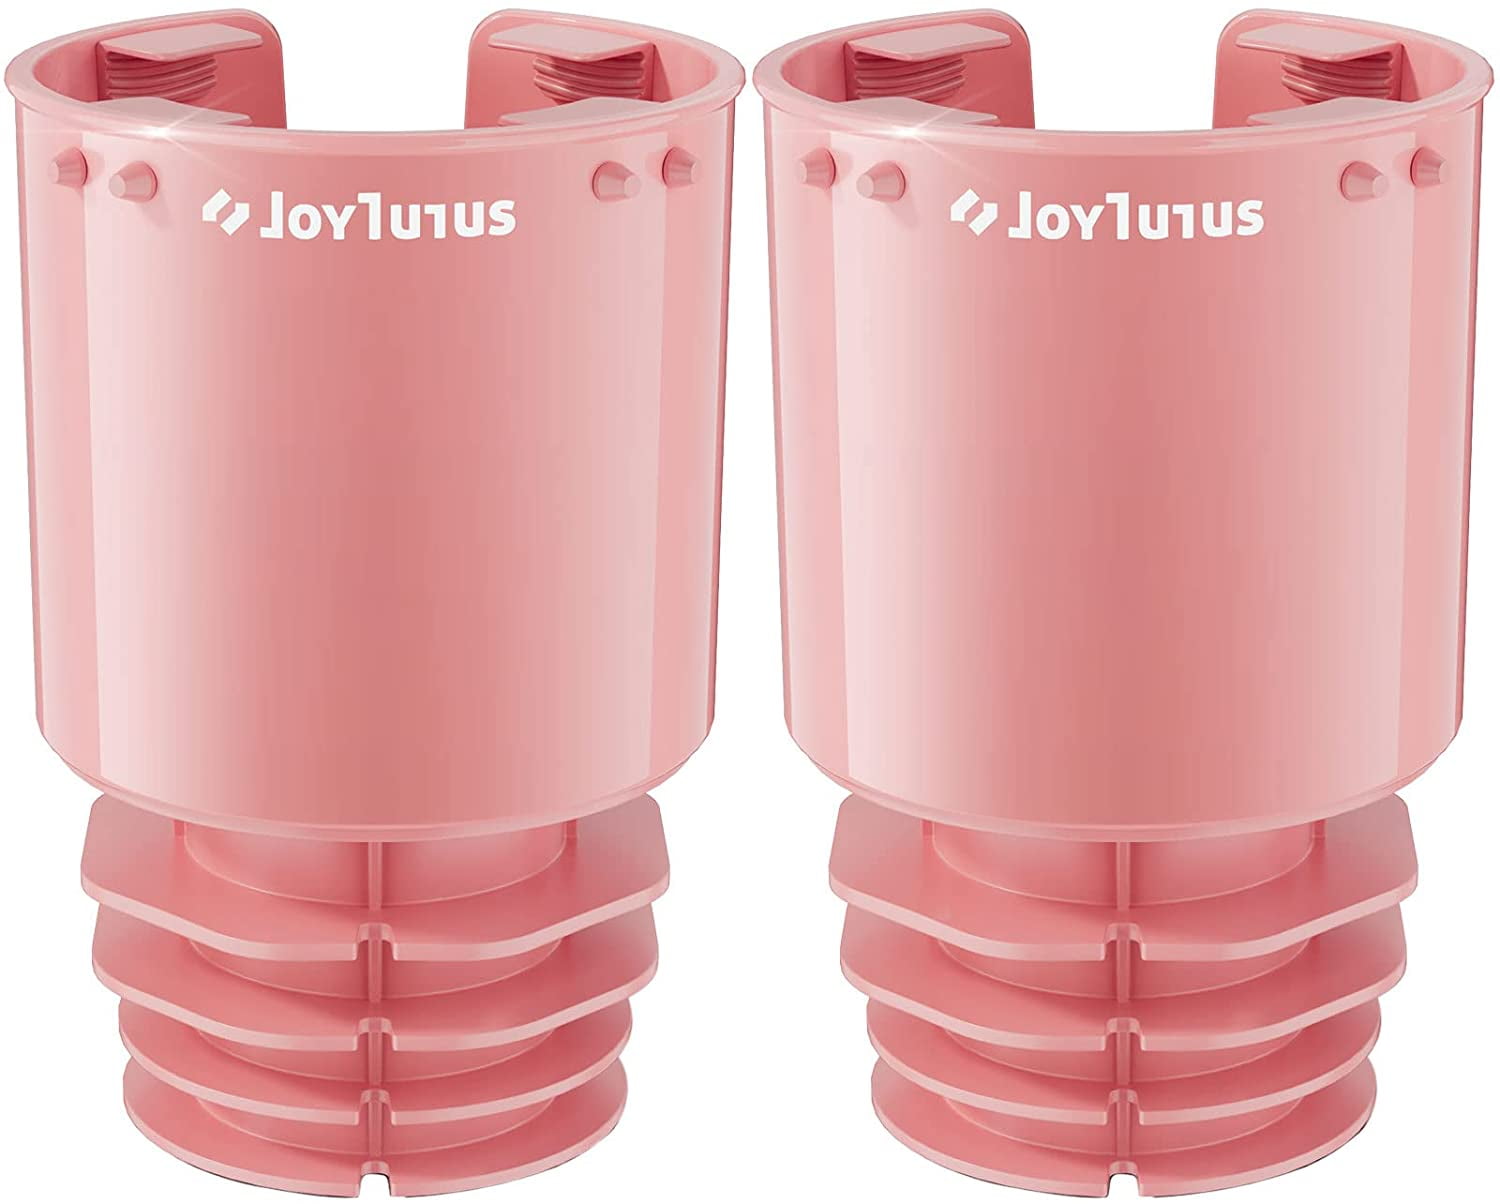  JOYTUTUS Large Stable Cup Holder Expander for YETI